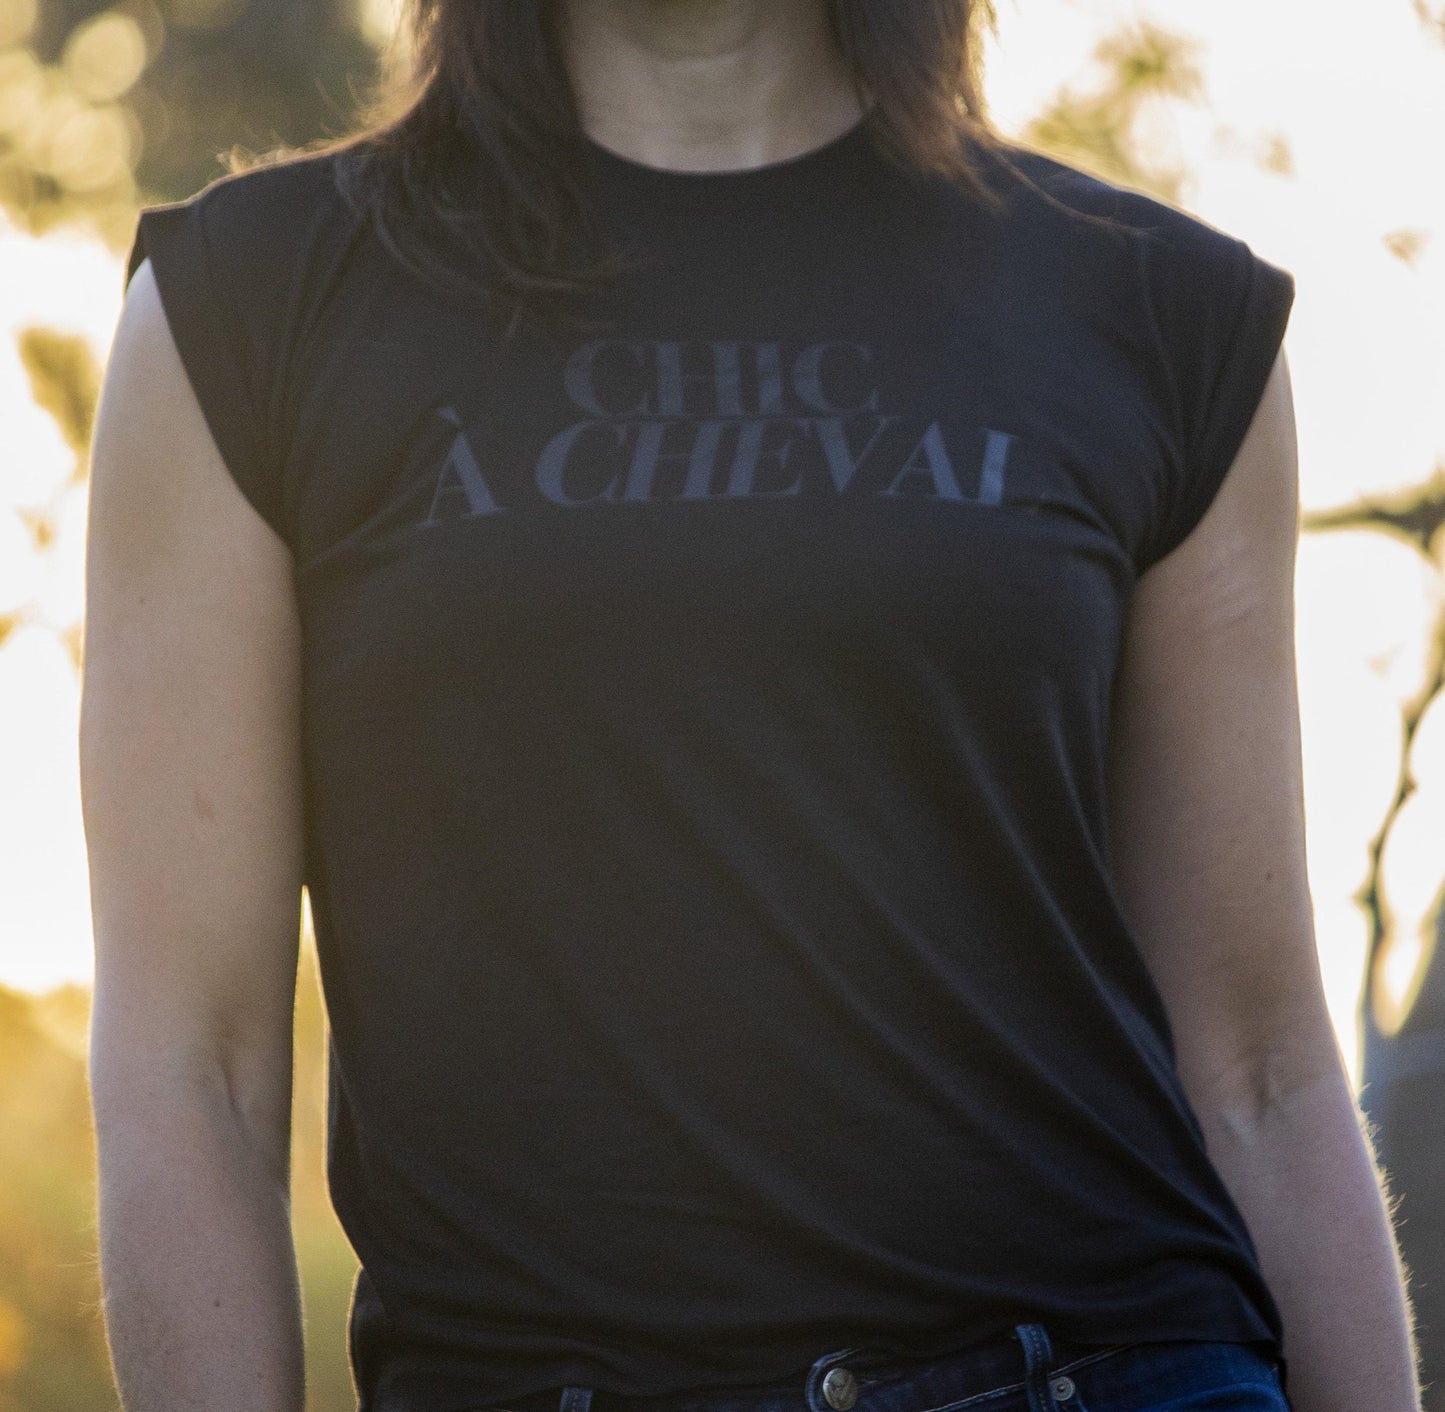 Chic à Cheval T-shirt Women's flowy Rolled Cuffs Black